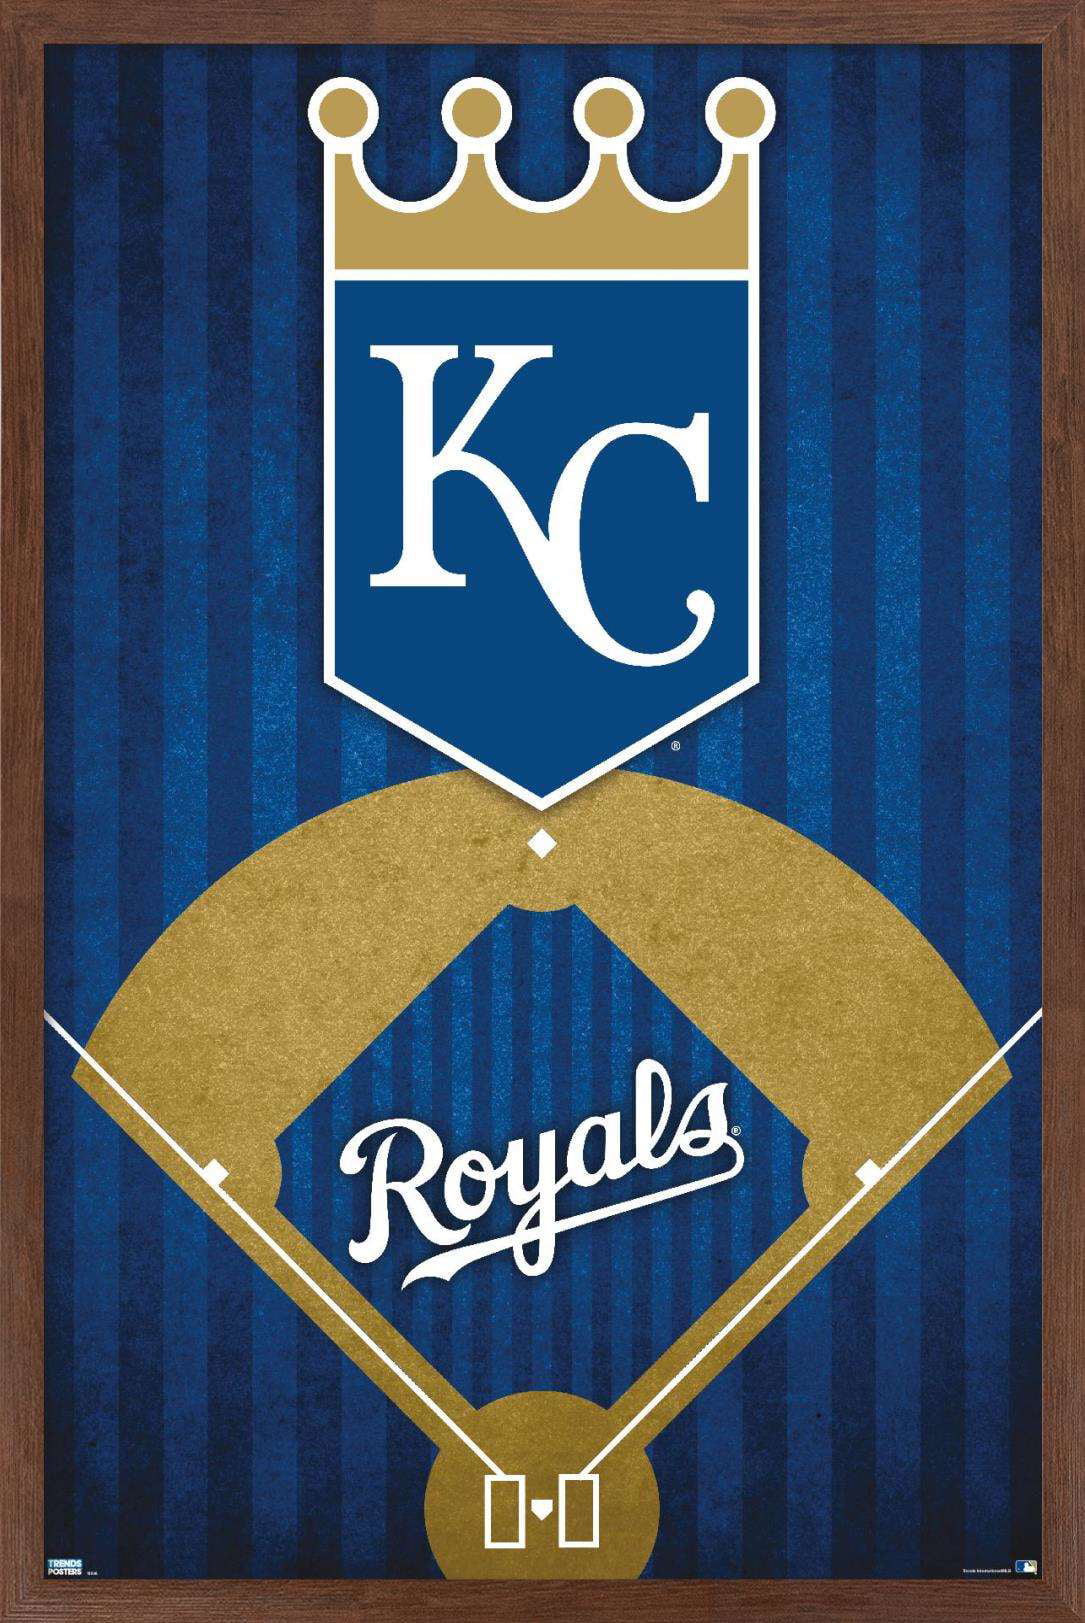 Kansas City Royals Majestic 2015 World Series Champions Gold